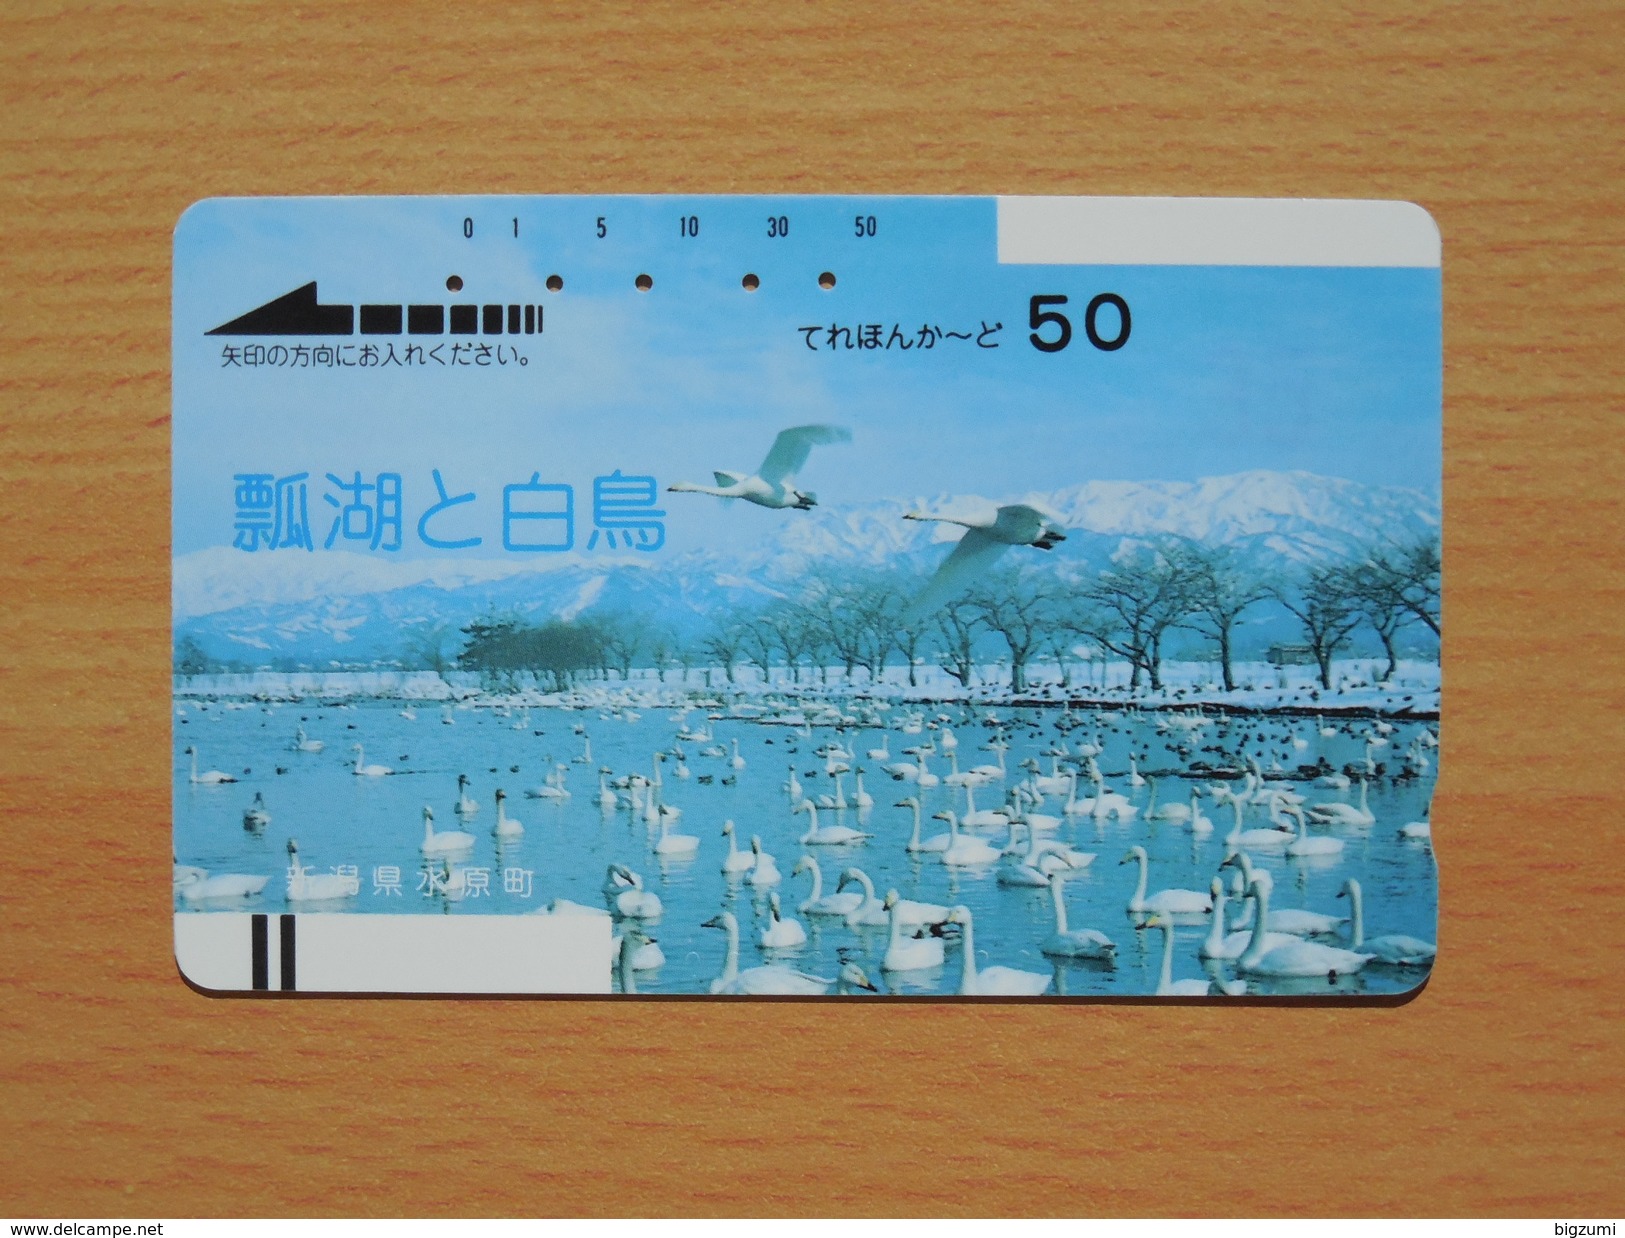 Japon Japan Free Front Bar, Balken Phonecard - 110-2508 / Swan, Schwan, Cygne - Songbirds & Tree Dwellers